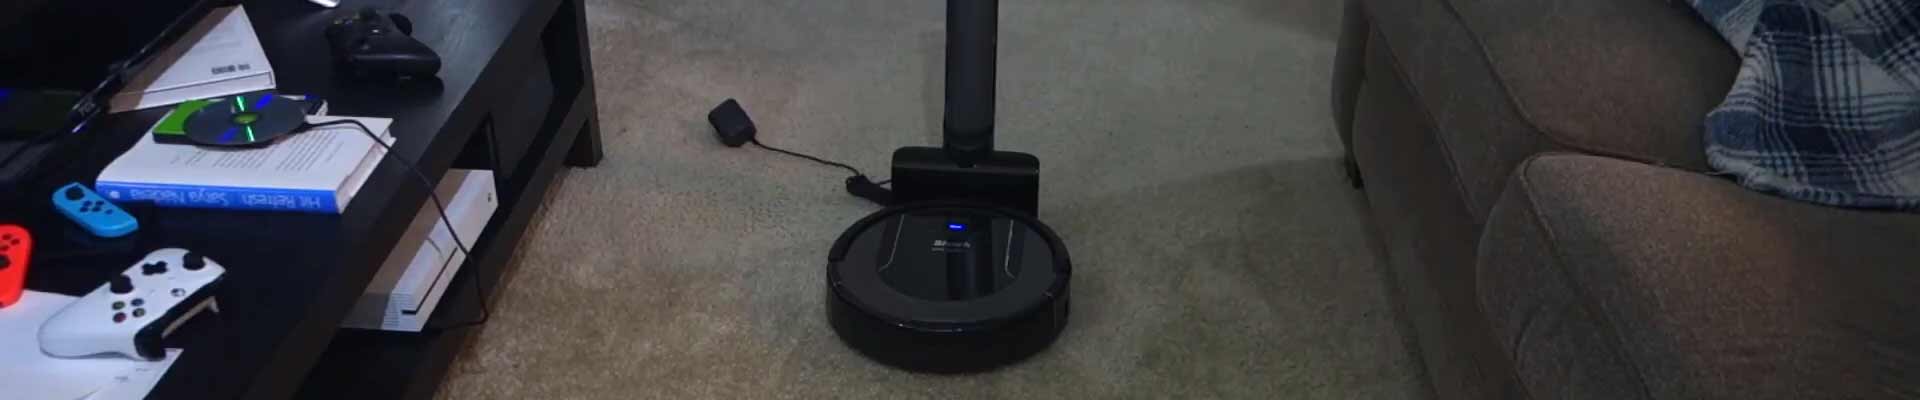 Shark RV851WV ION Robot Vacuum